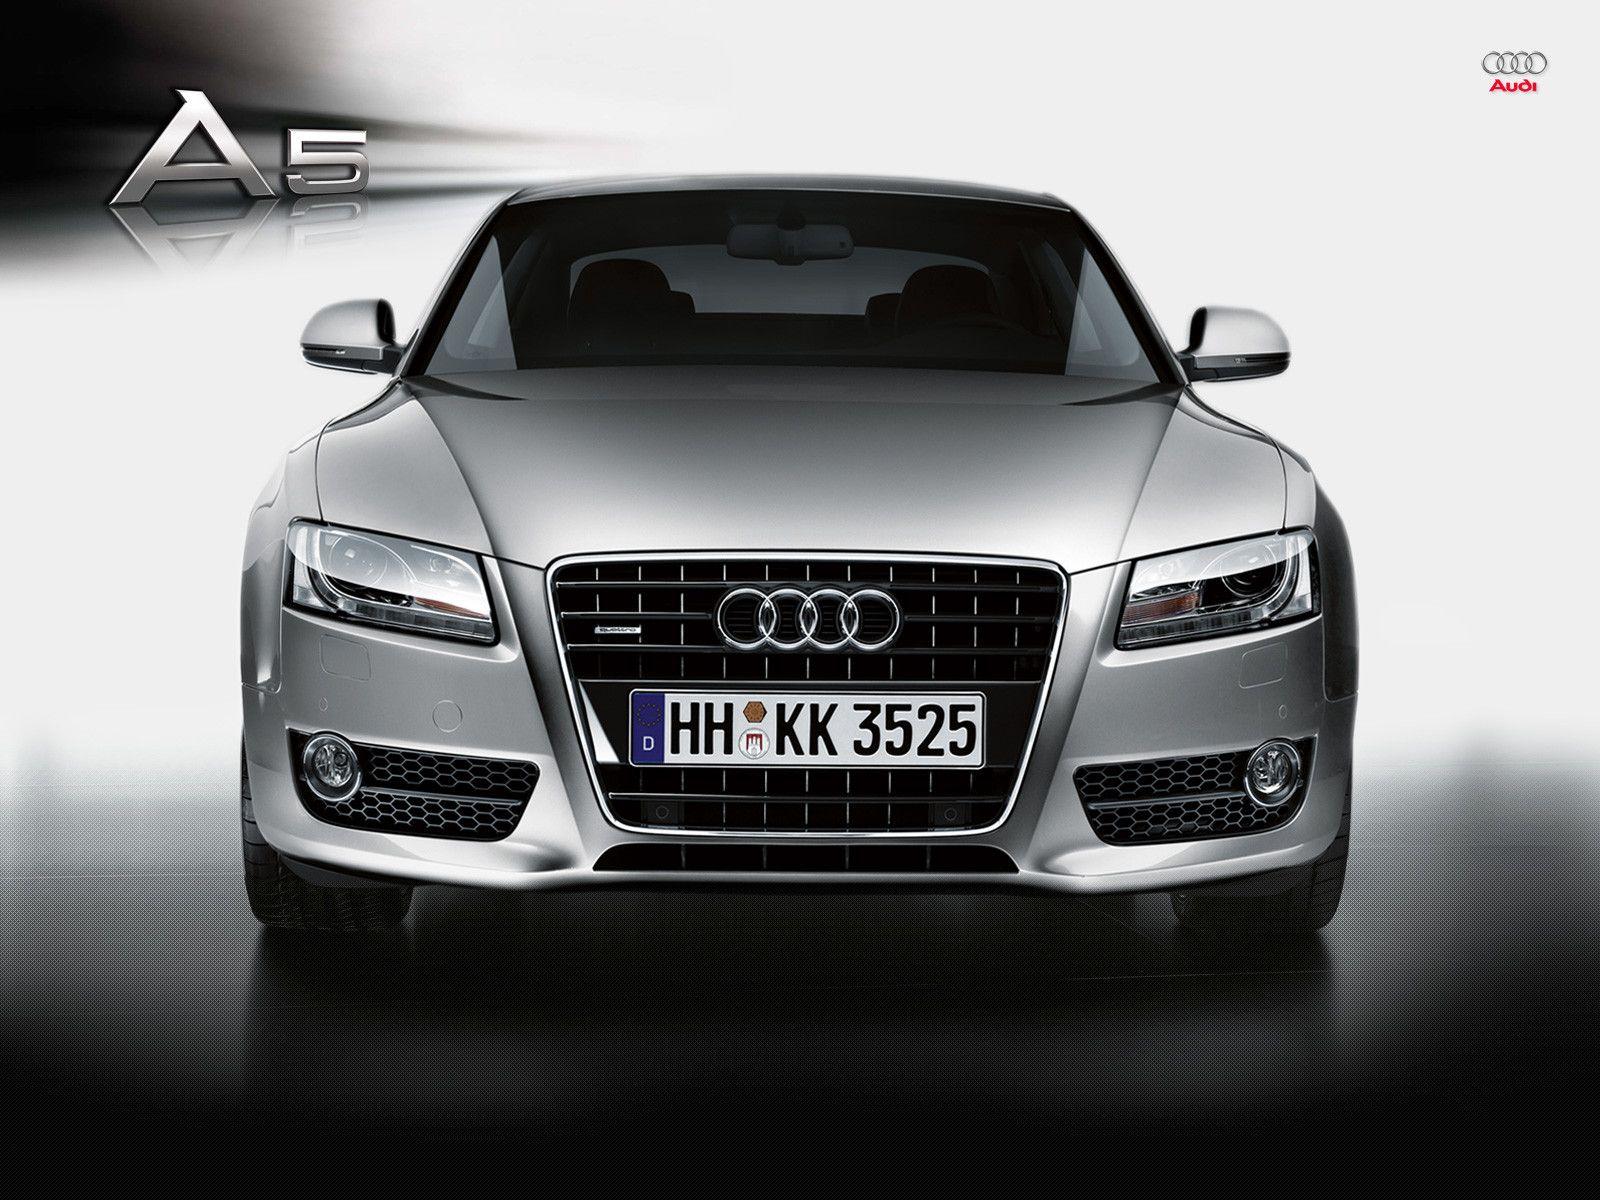 Audi a5 wallpaper. Cars Wallpaper And Picture car image, car pics